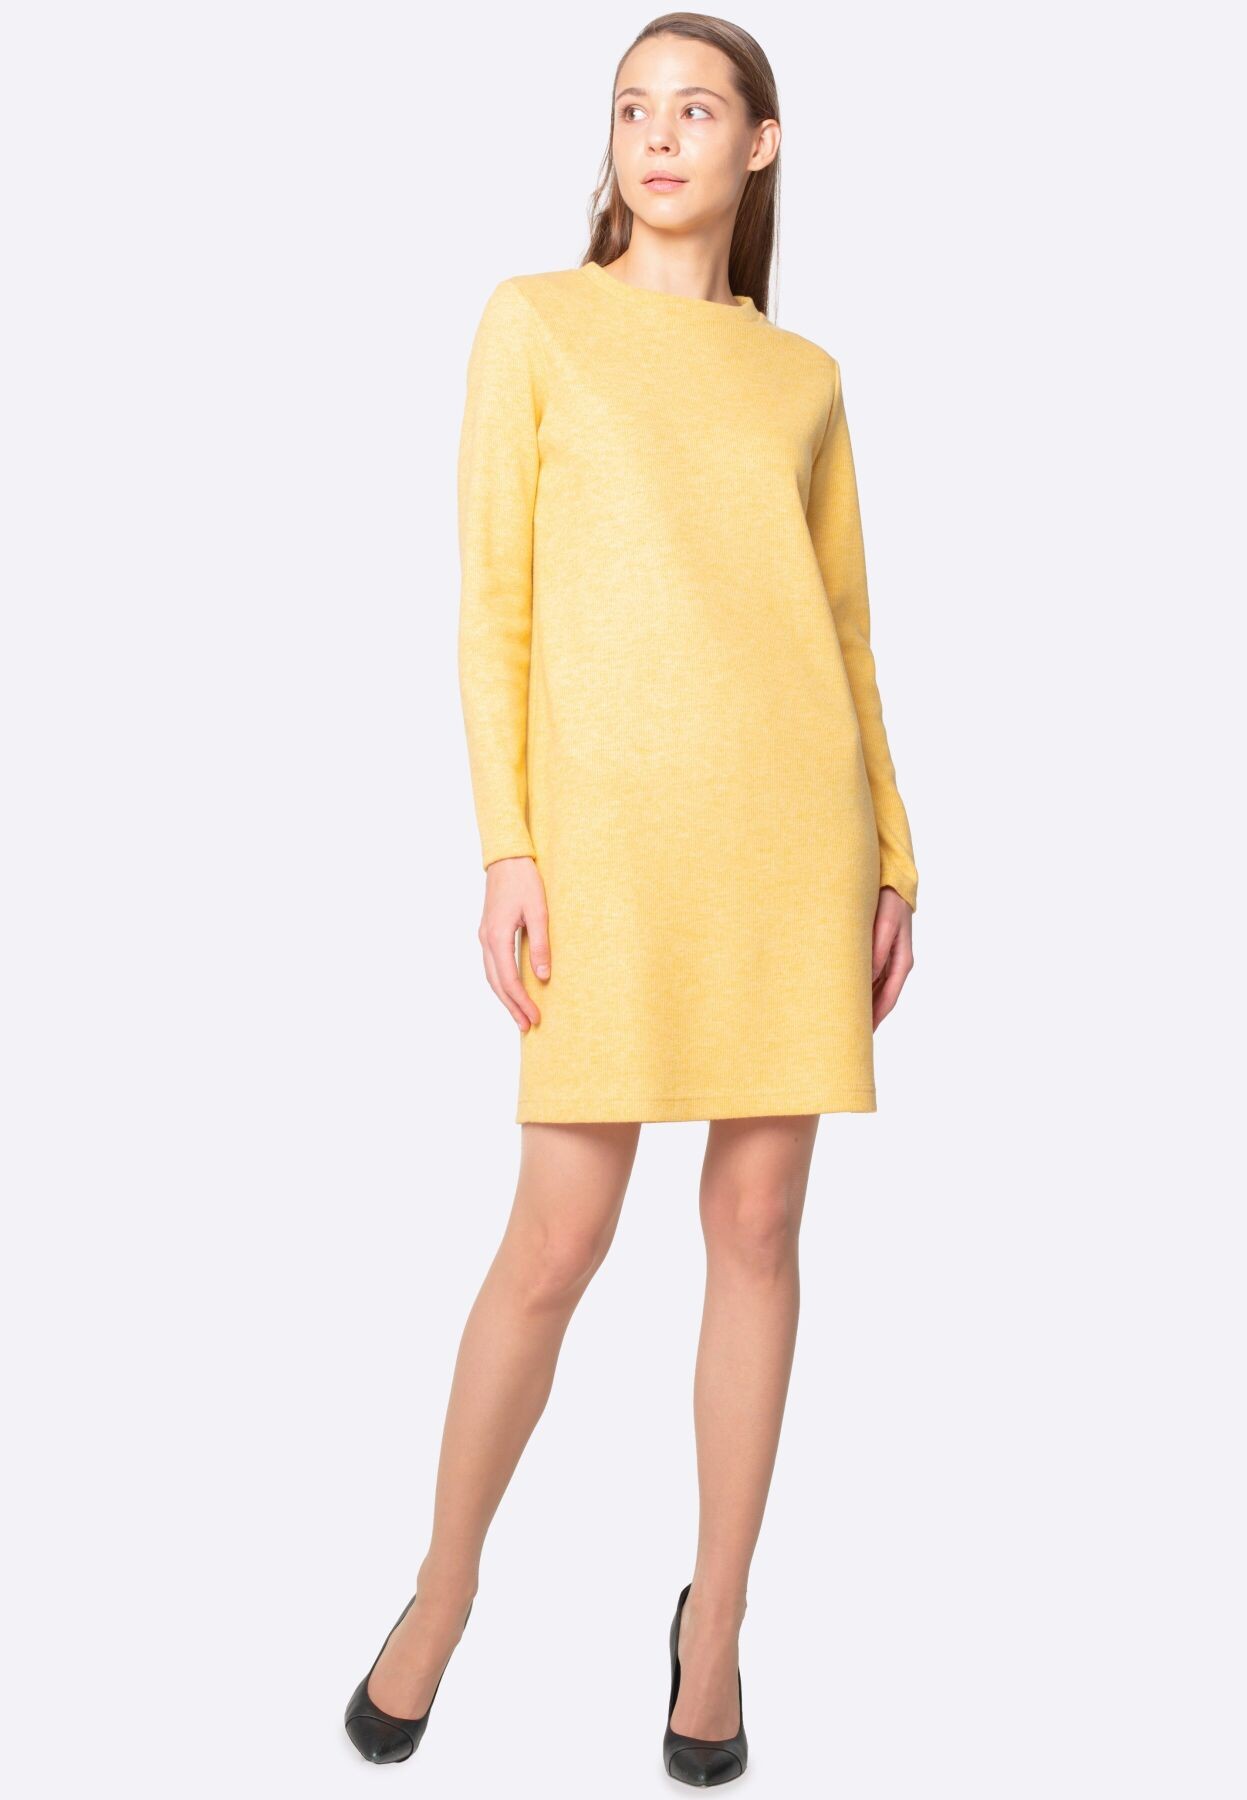 Warm yellow dress made of woolen knitwear 5674